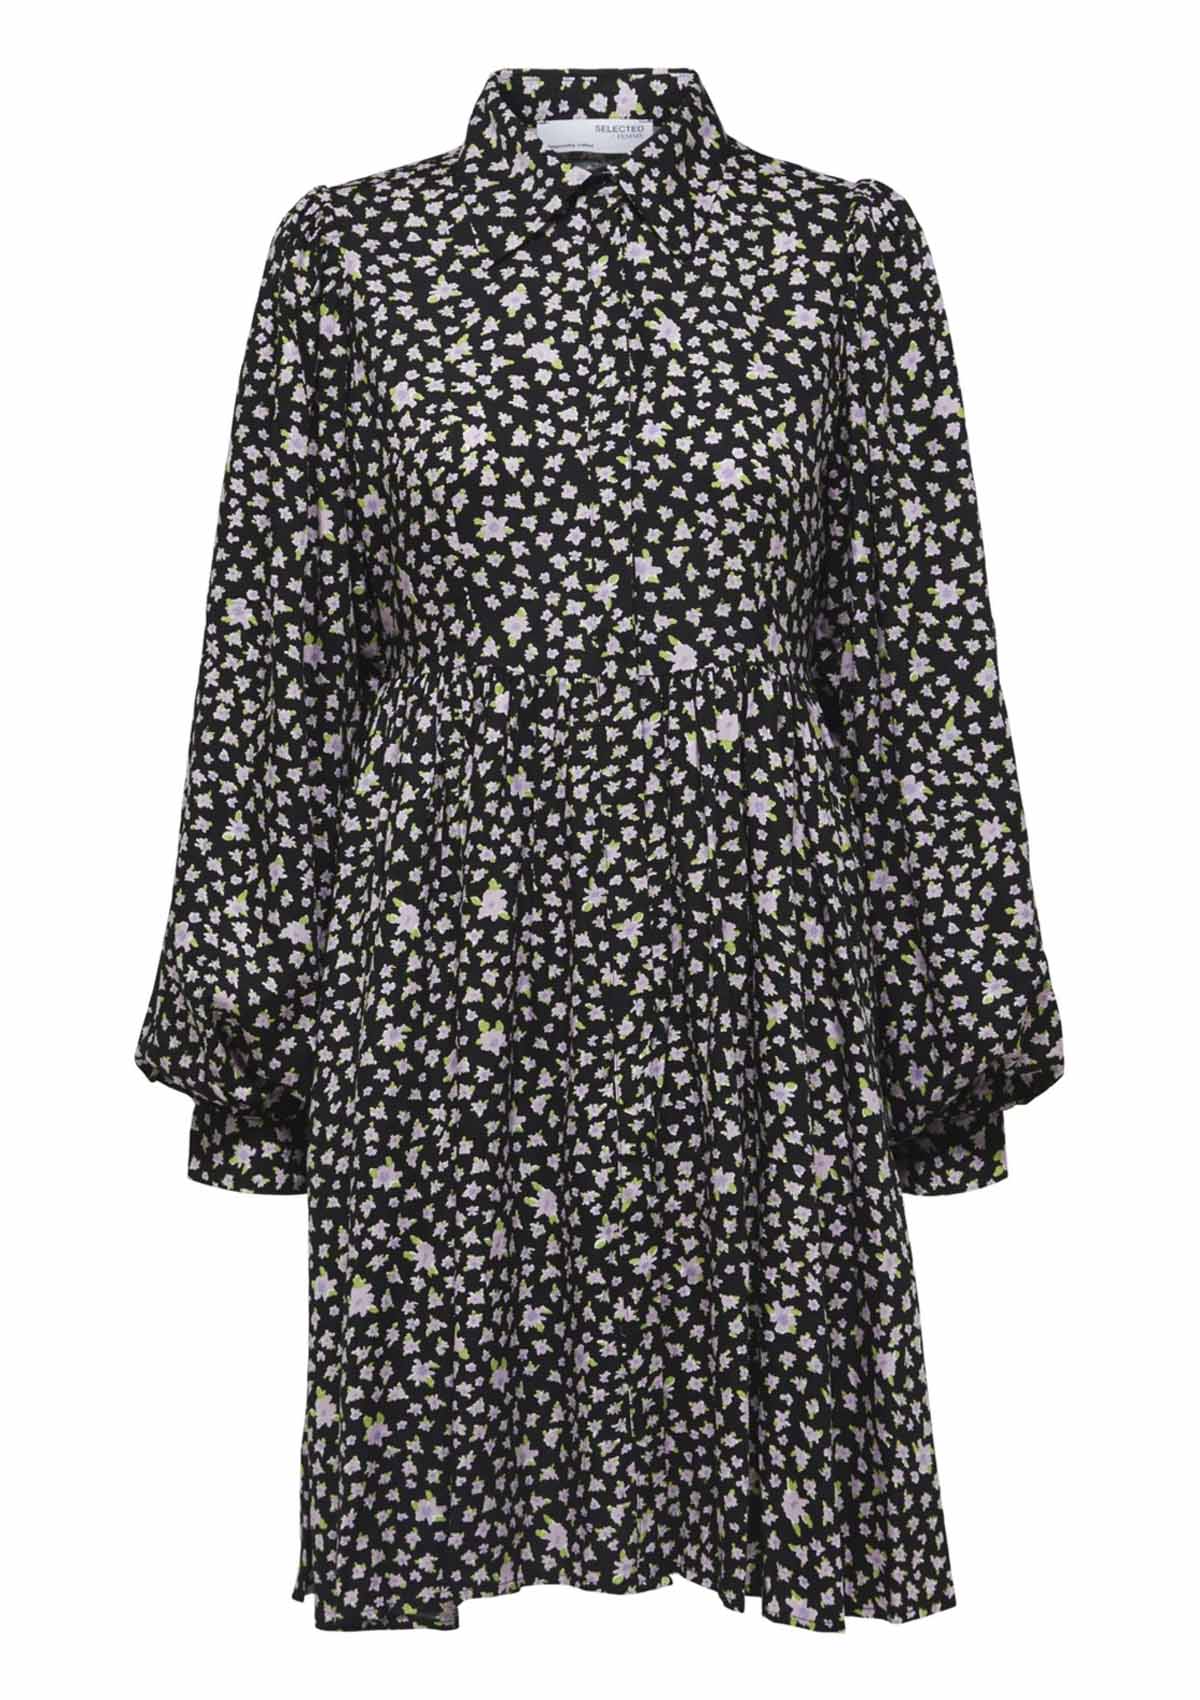 Selected Femme Judita Short Black Floral Shirt Dress